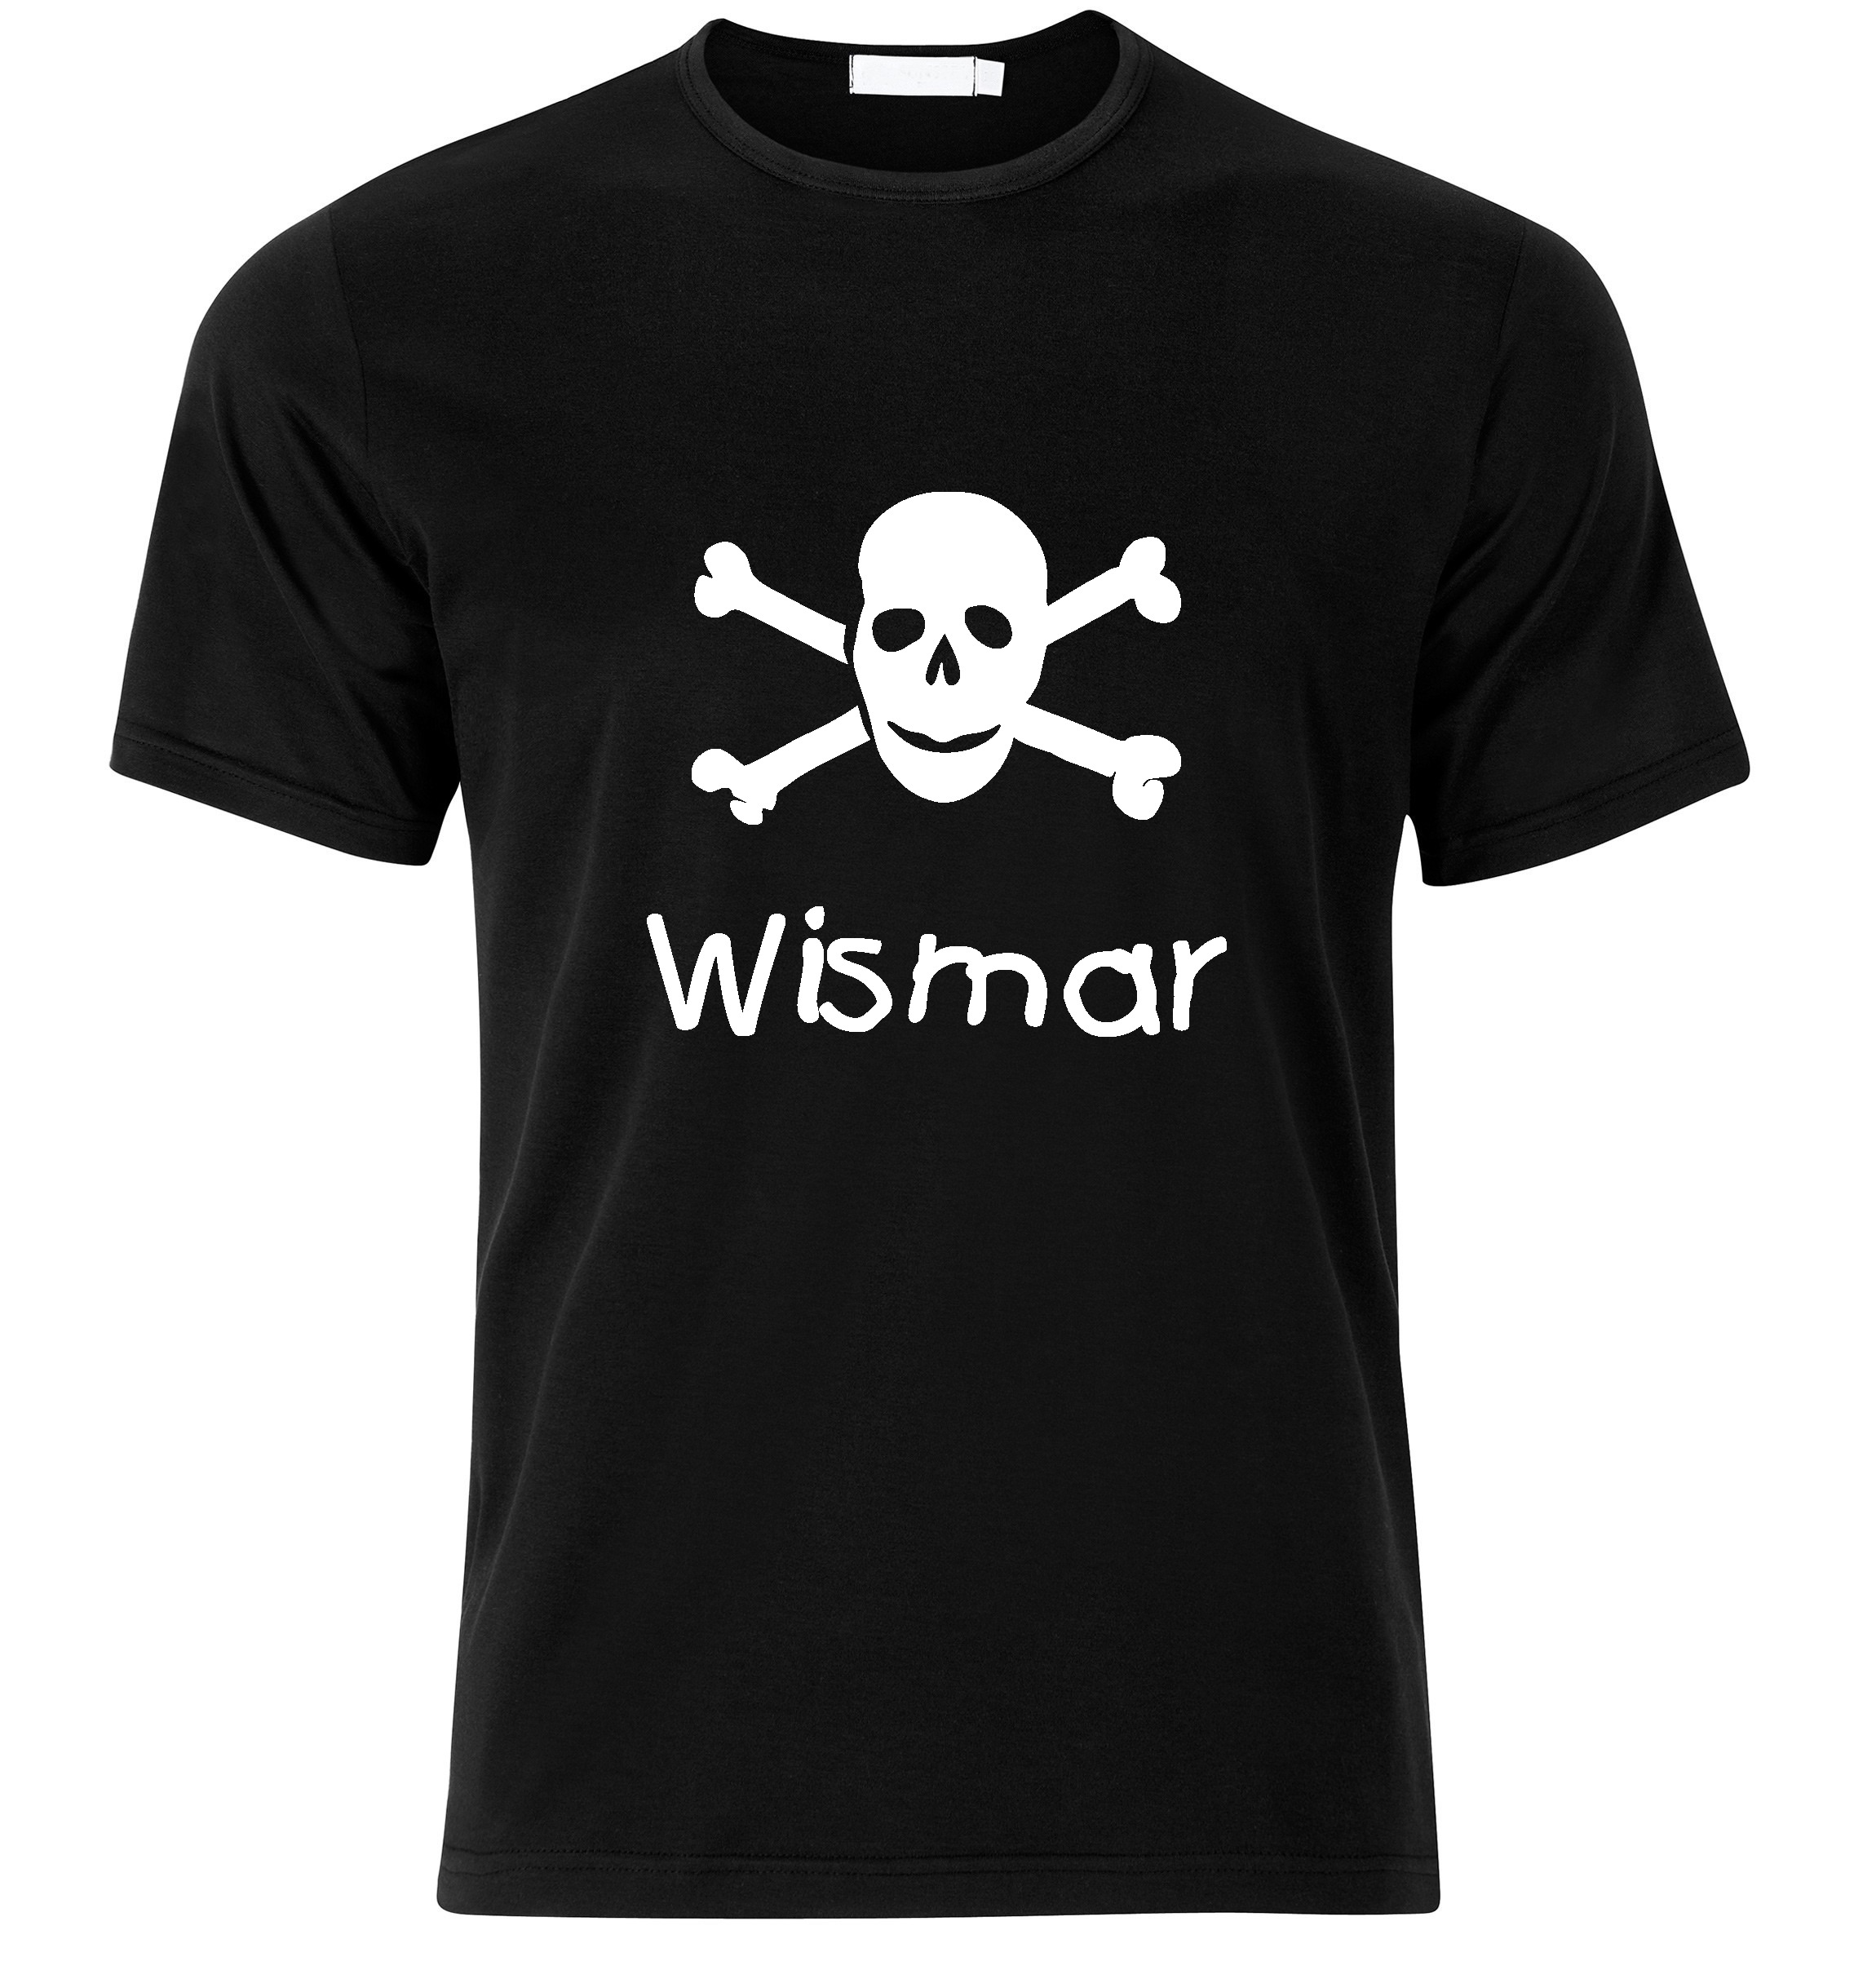 T-Shirt Wismar Jolly Roger, Totenkopf